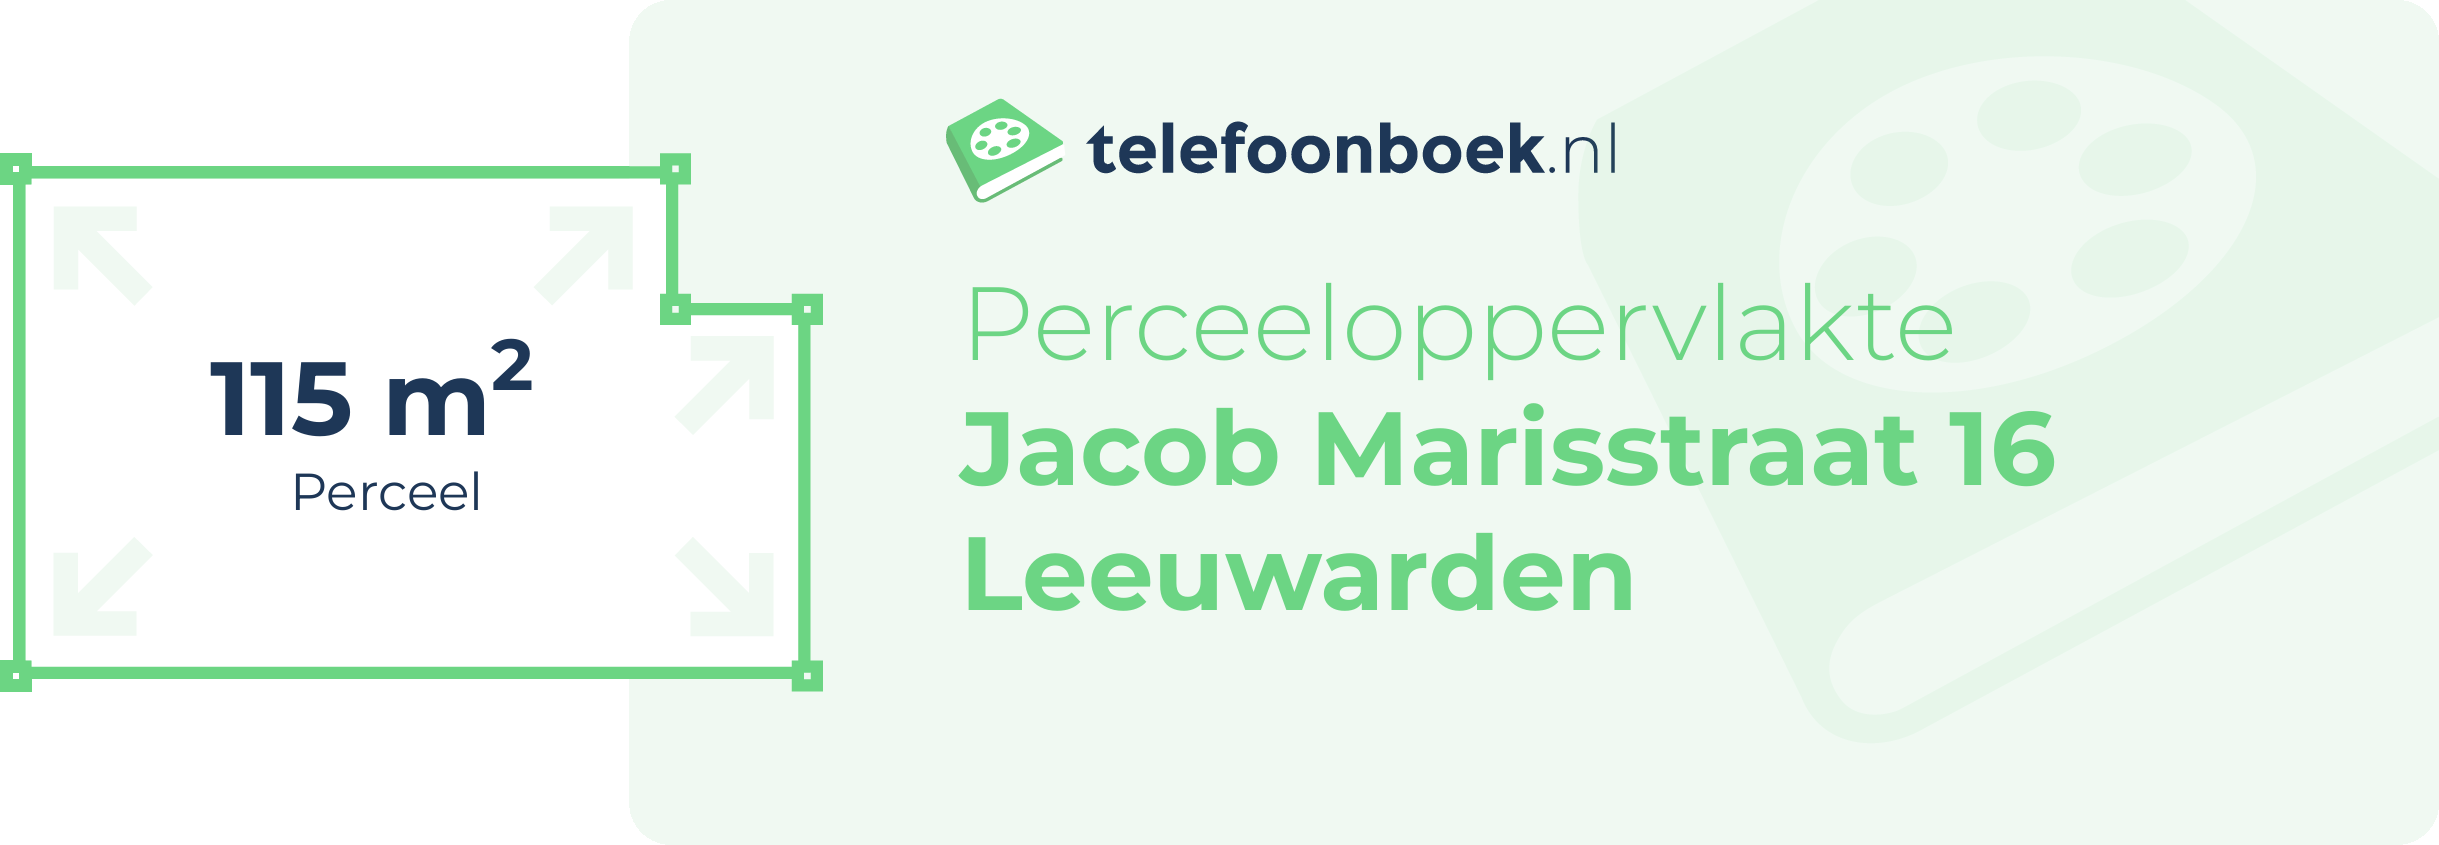 Perceeloppervlakte Jacob Marisstraat 16 Leeuwarden